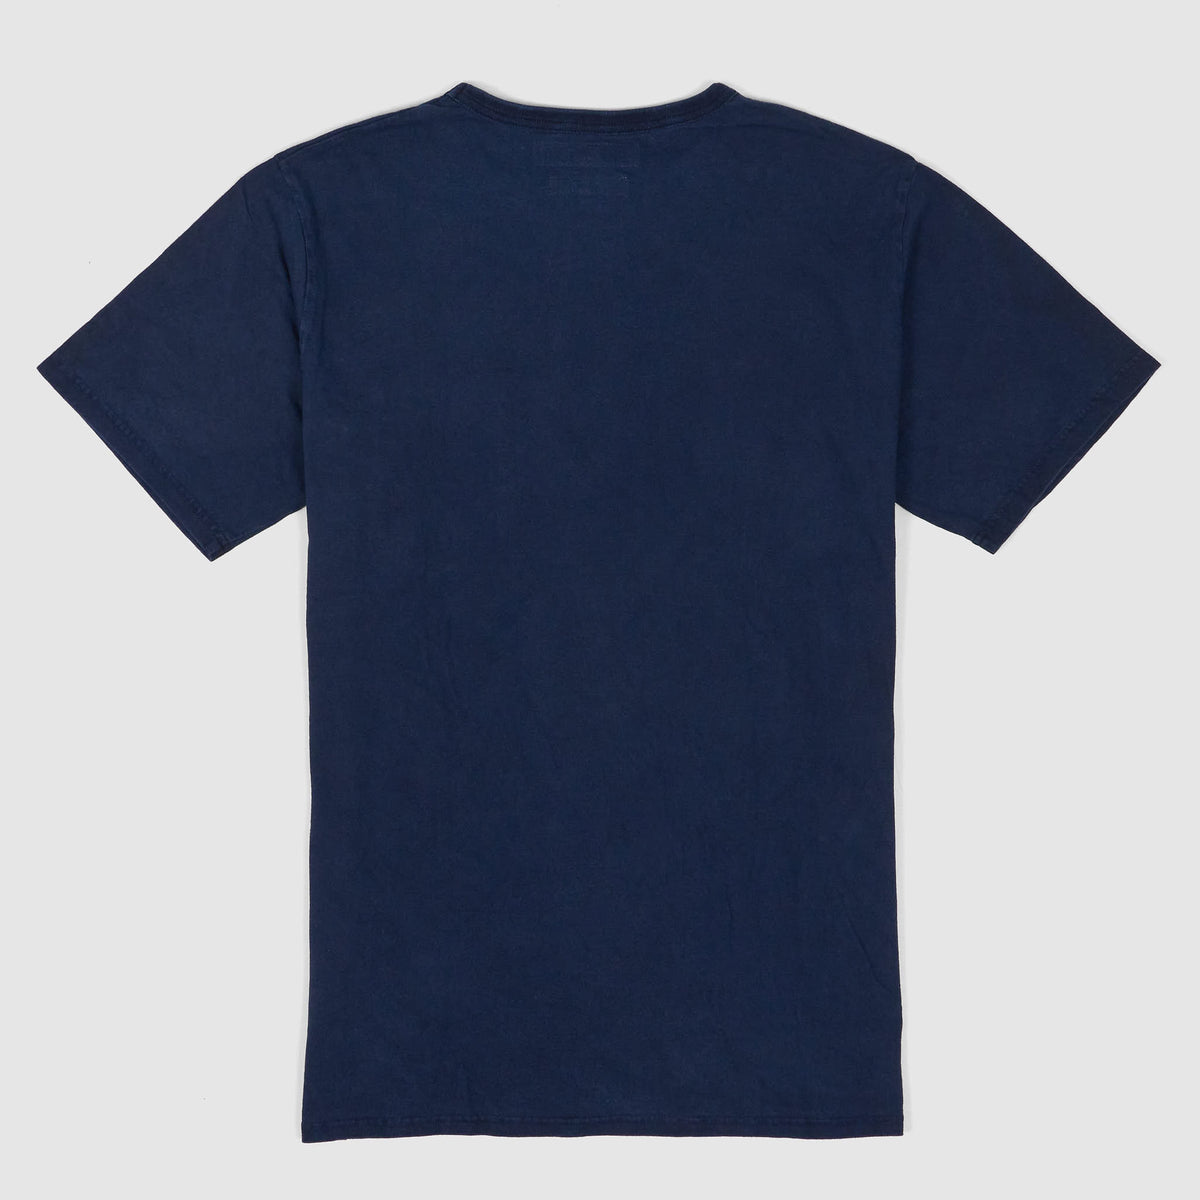 FDMTL Short Sleeve Sashiko Patch Pocket Crew Neck T-Shirt